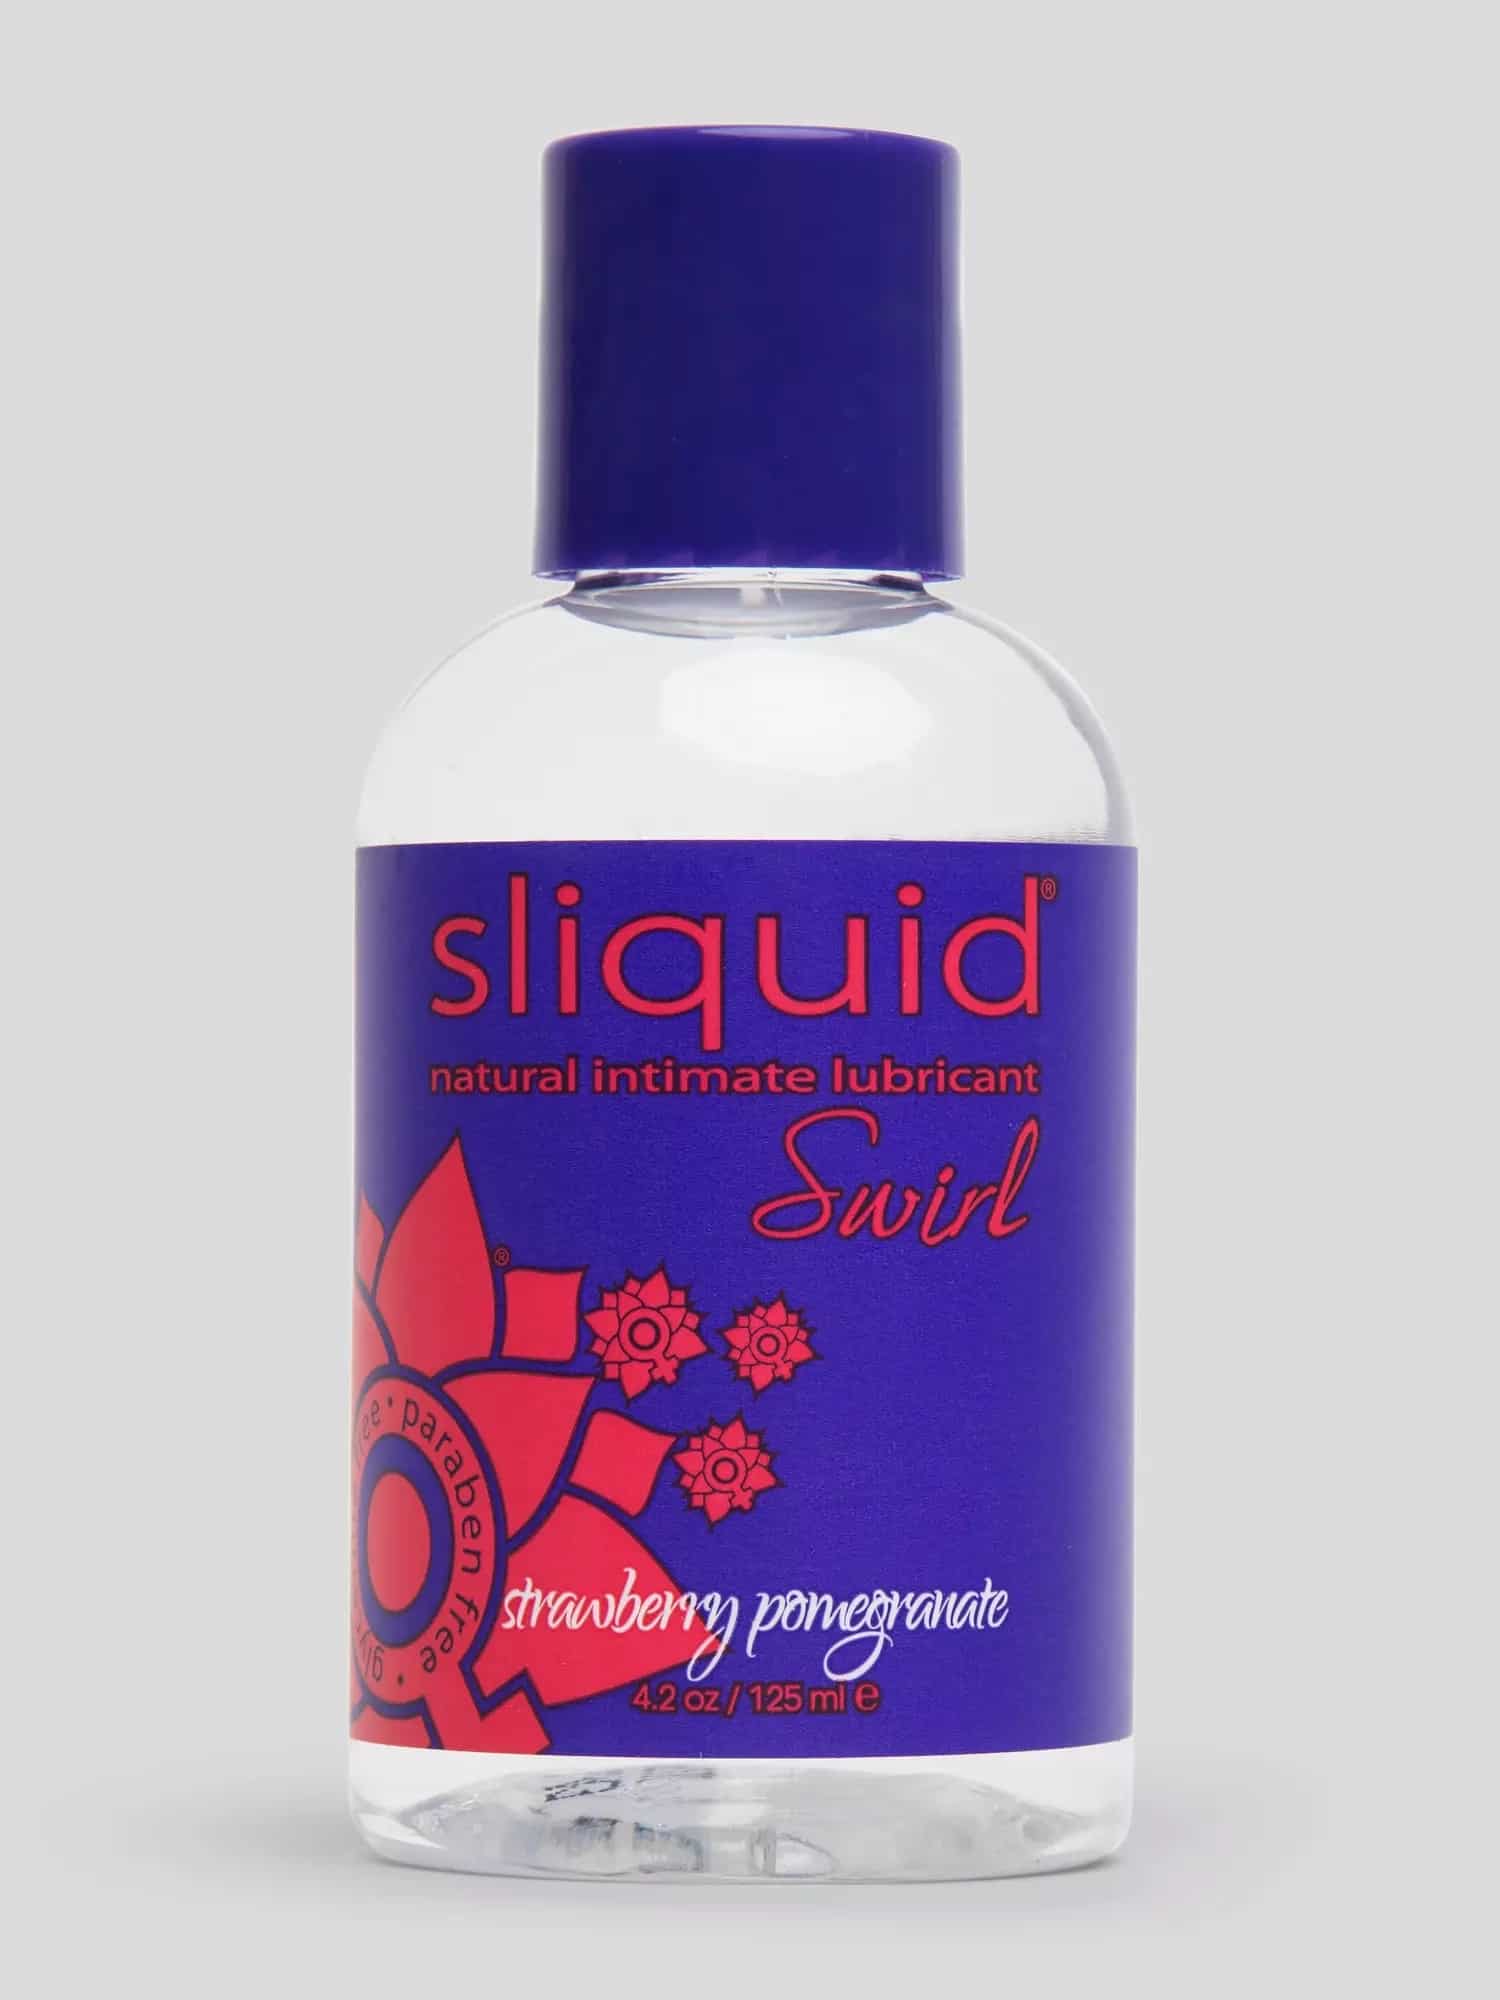 Sliquid Swirl Strawberry Pomegranate Flavored Lubricant. Slide 1